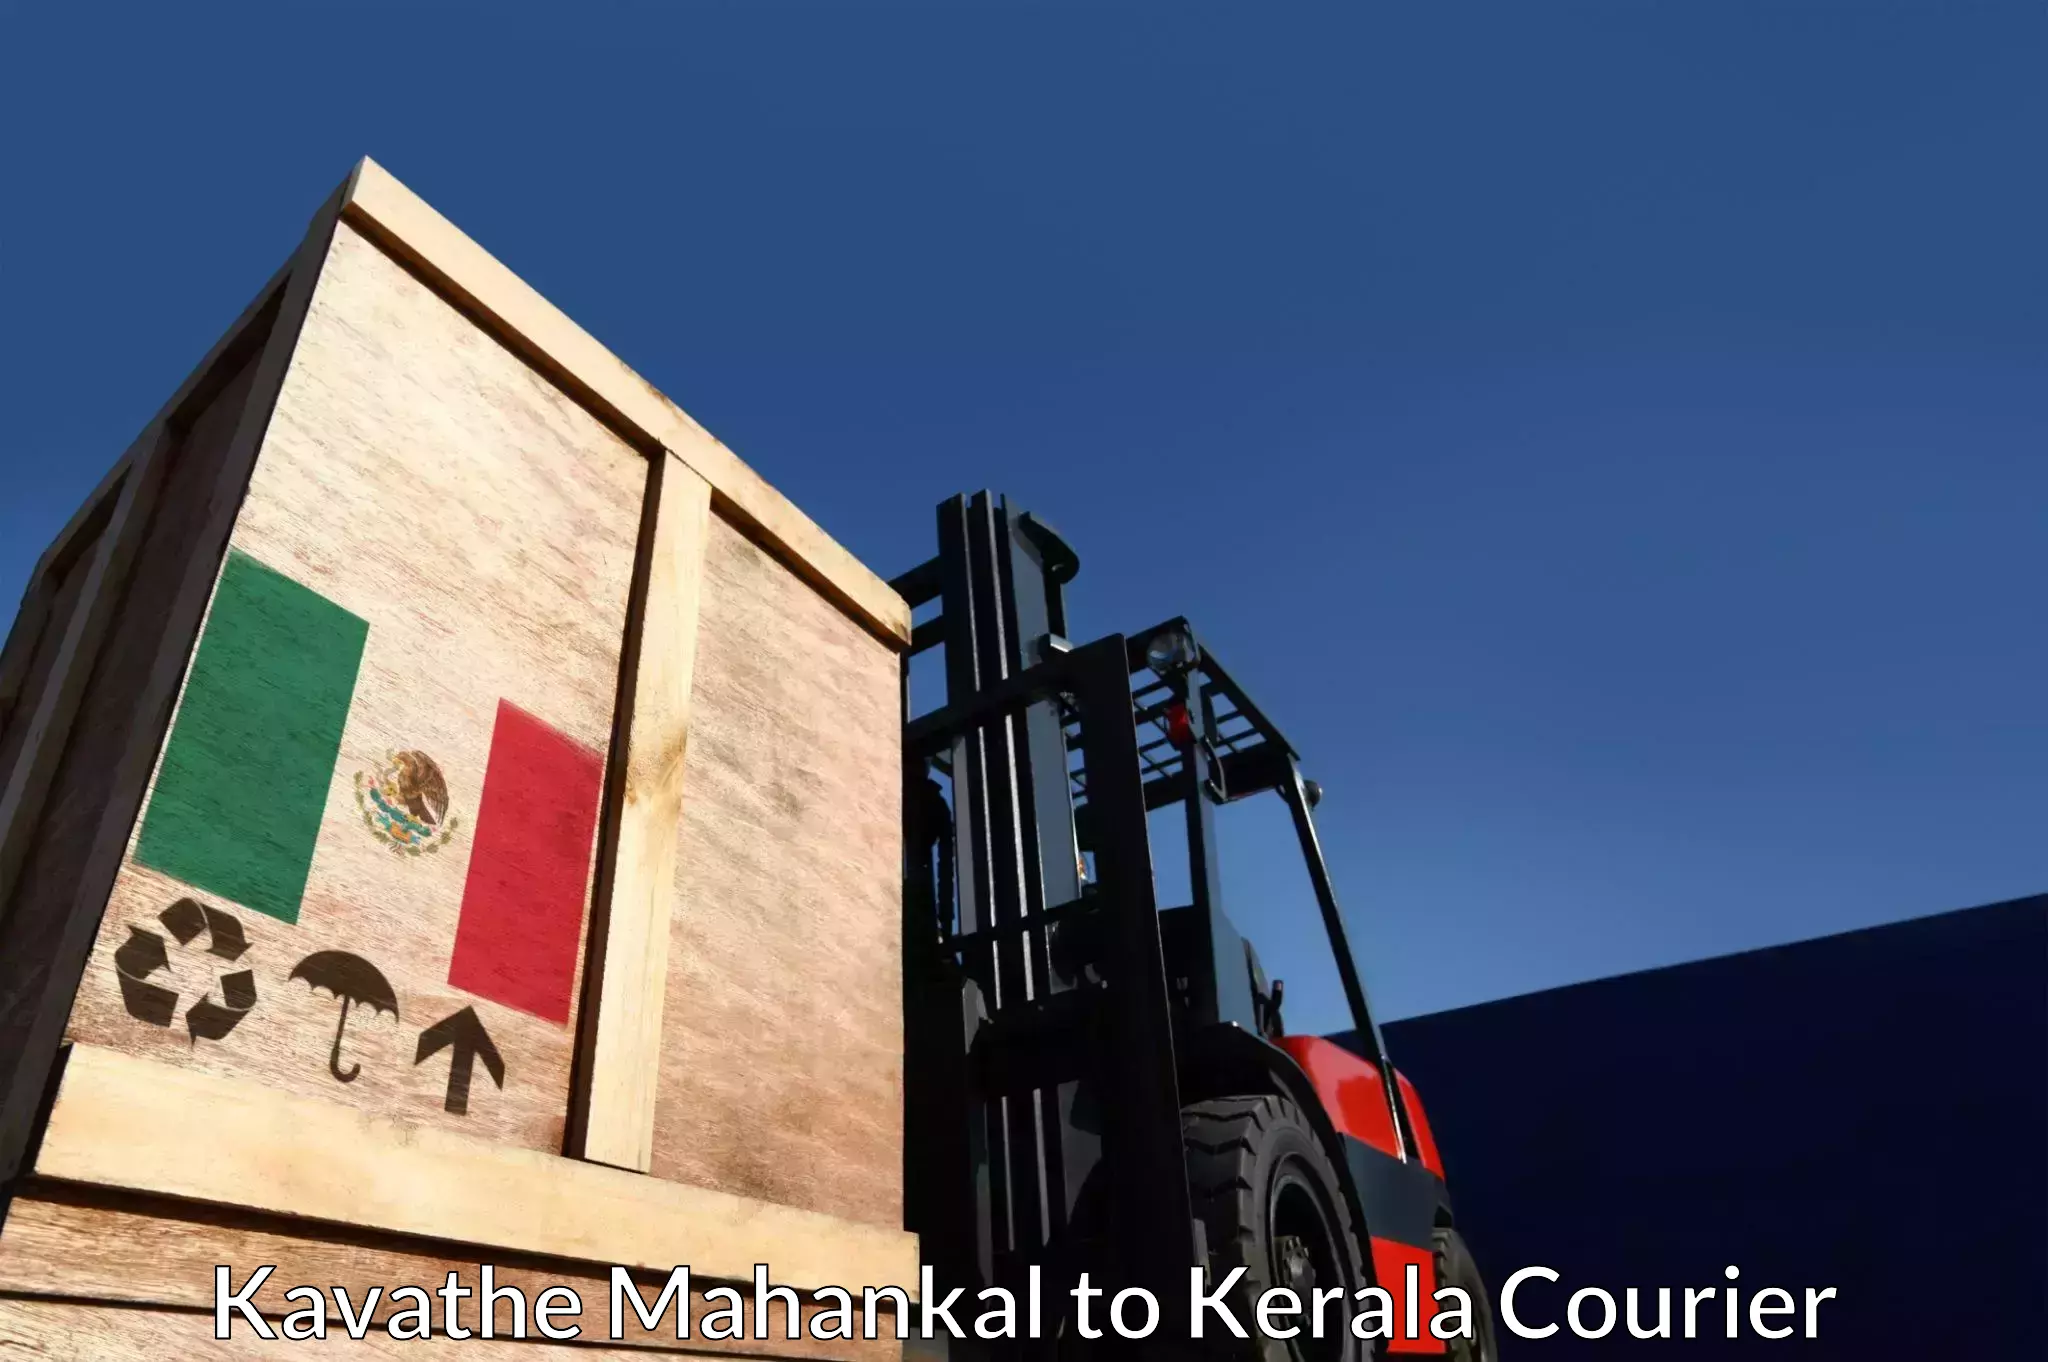 Courier dispatch services Kavathe Mahankal to Thrissur